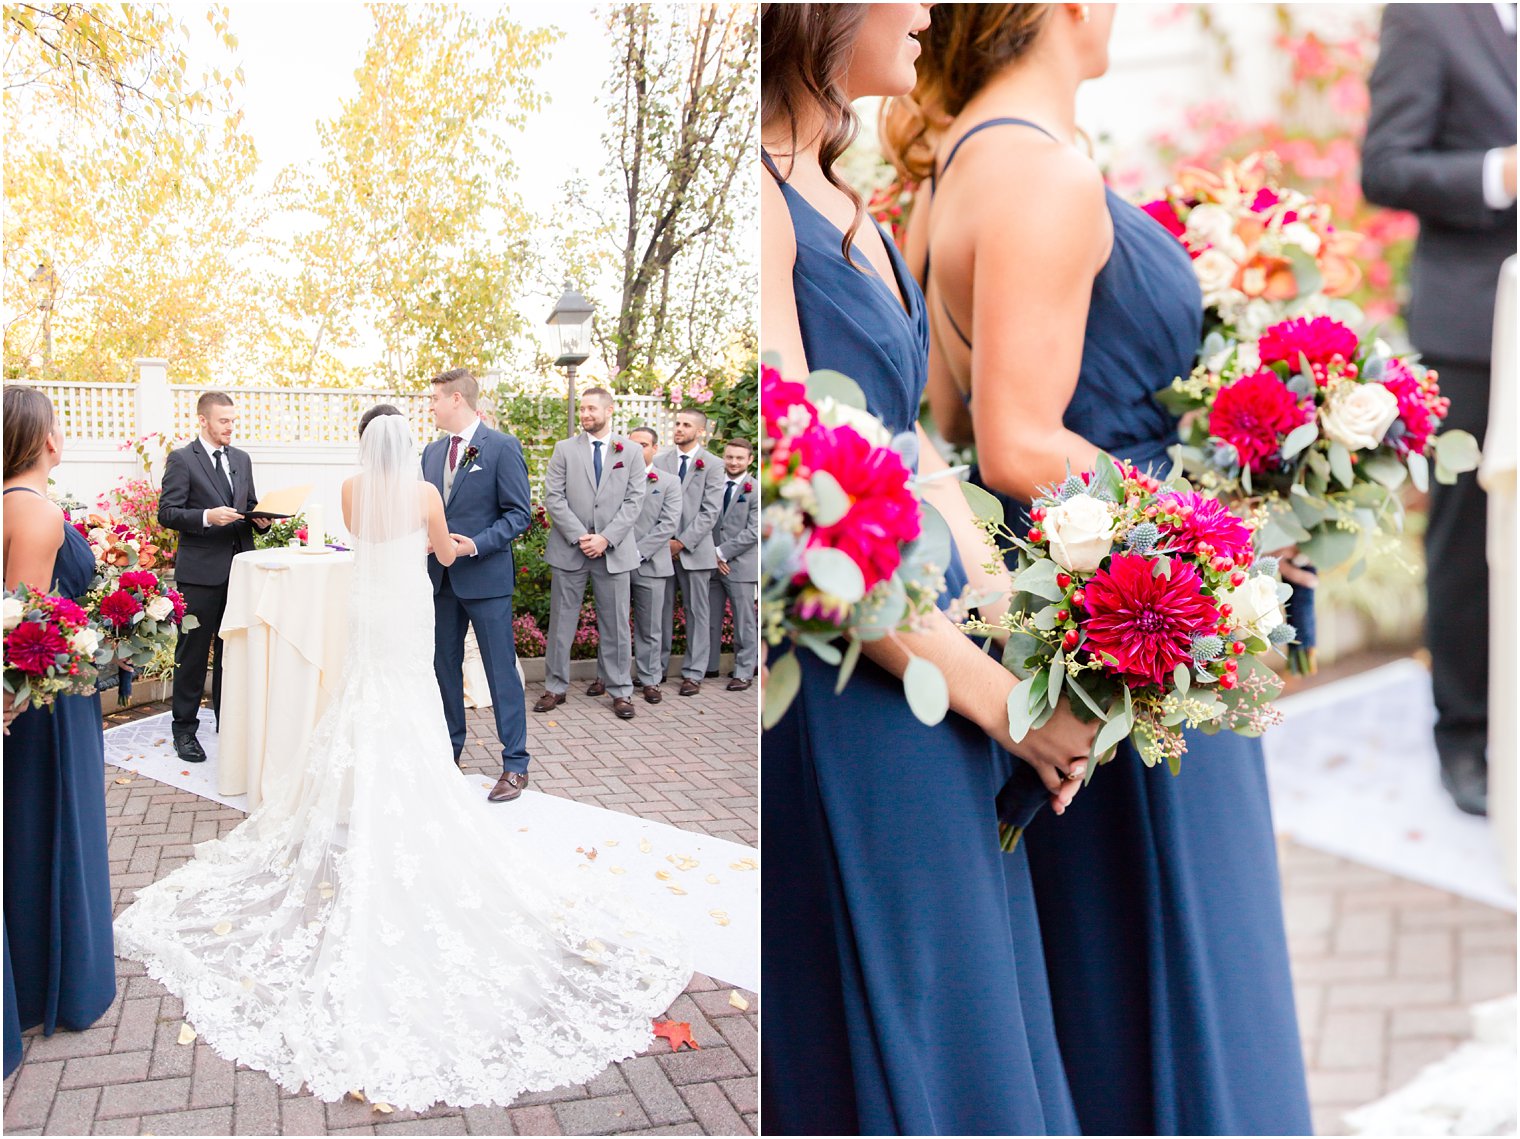 Outdoor fall wedding ceremony at Meadow Wood Manor | Photos by NJ Wedding Photographers Idalia Photography